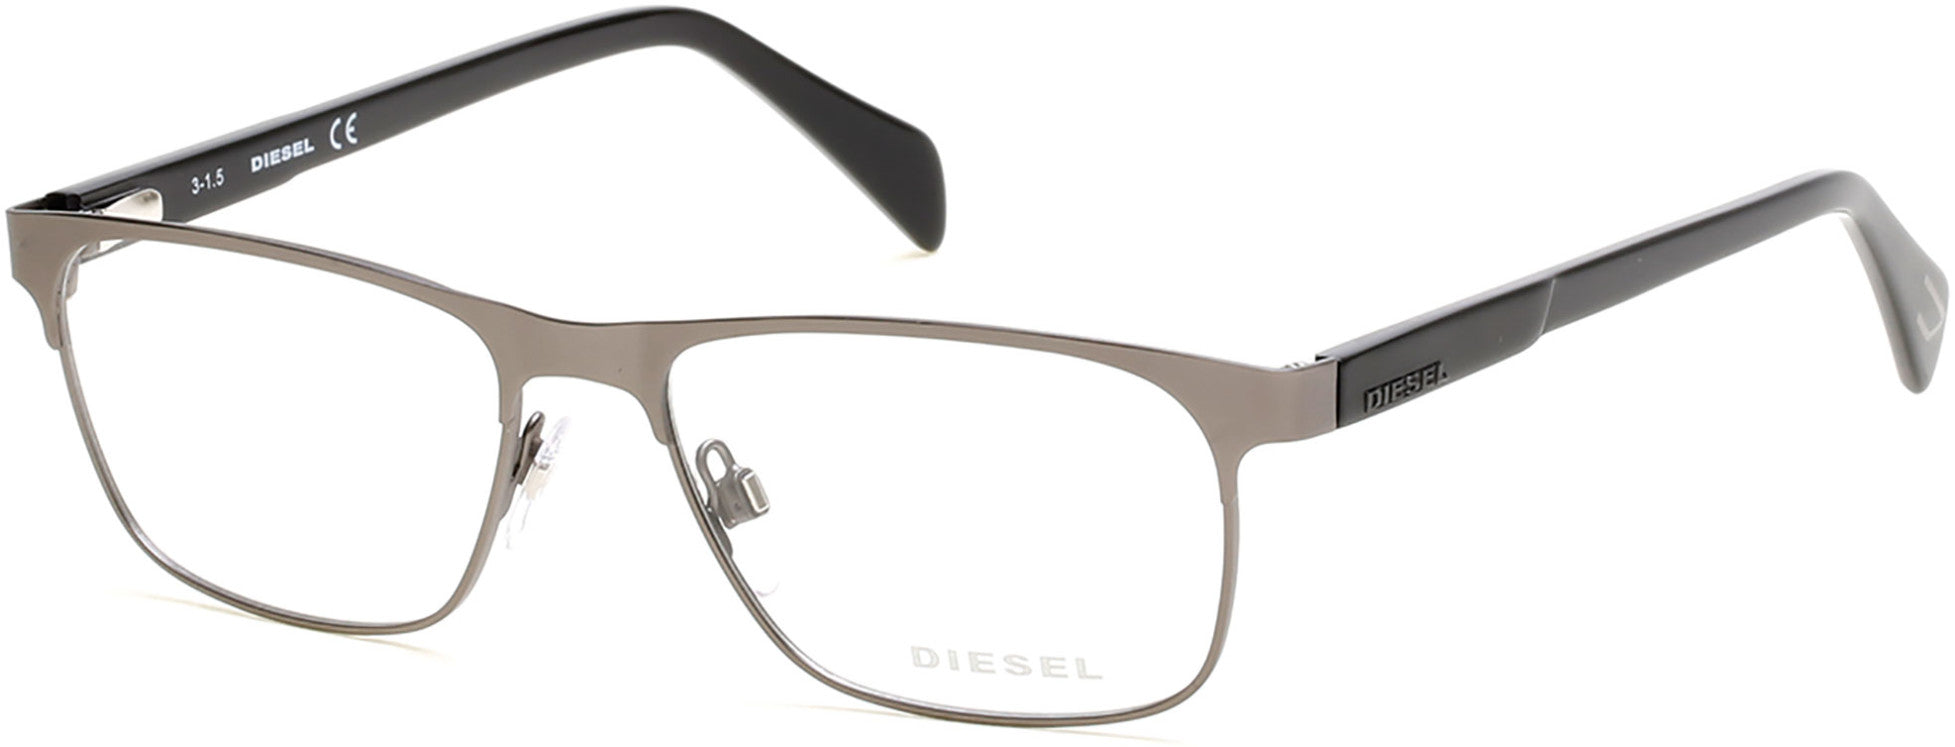 Diesel DL5171 Rectangular Eyeglasses 009-009 - Matte Gunmetal